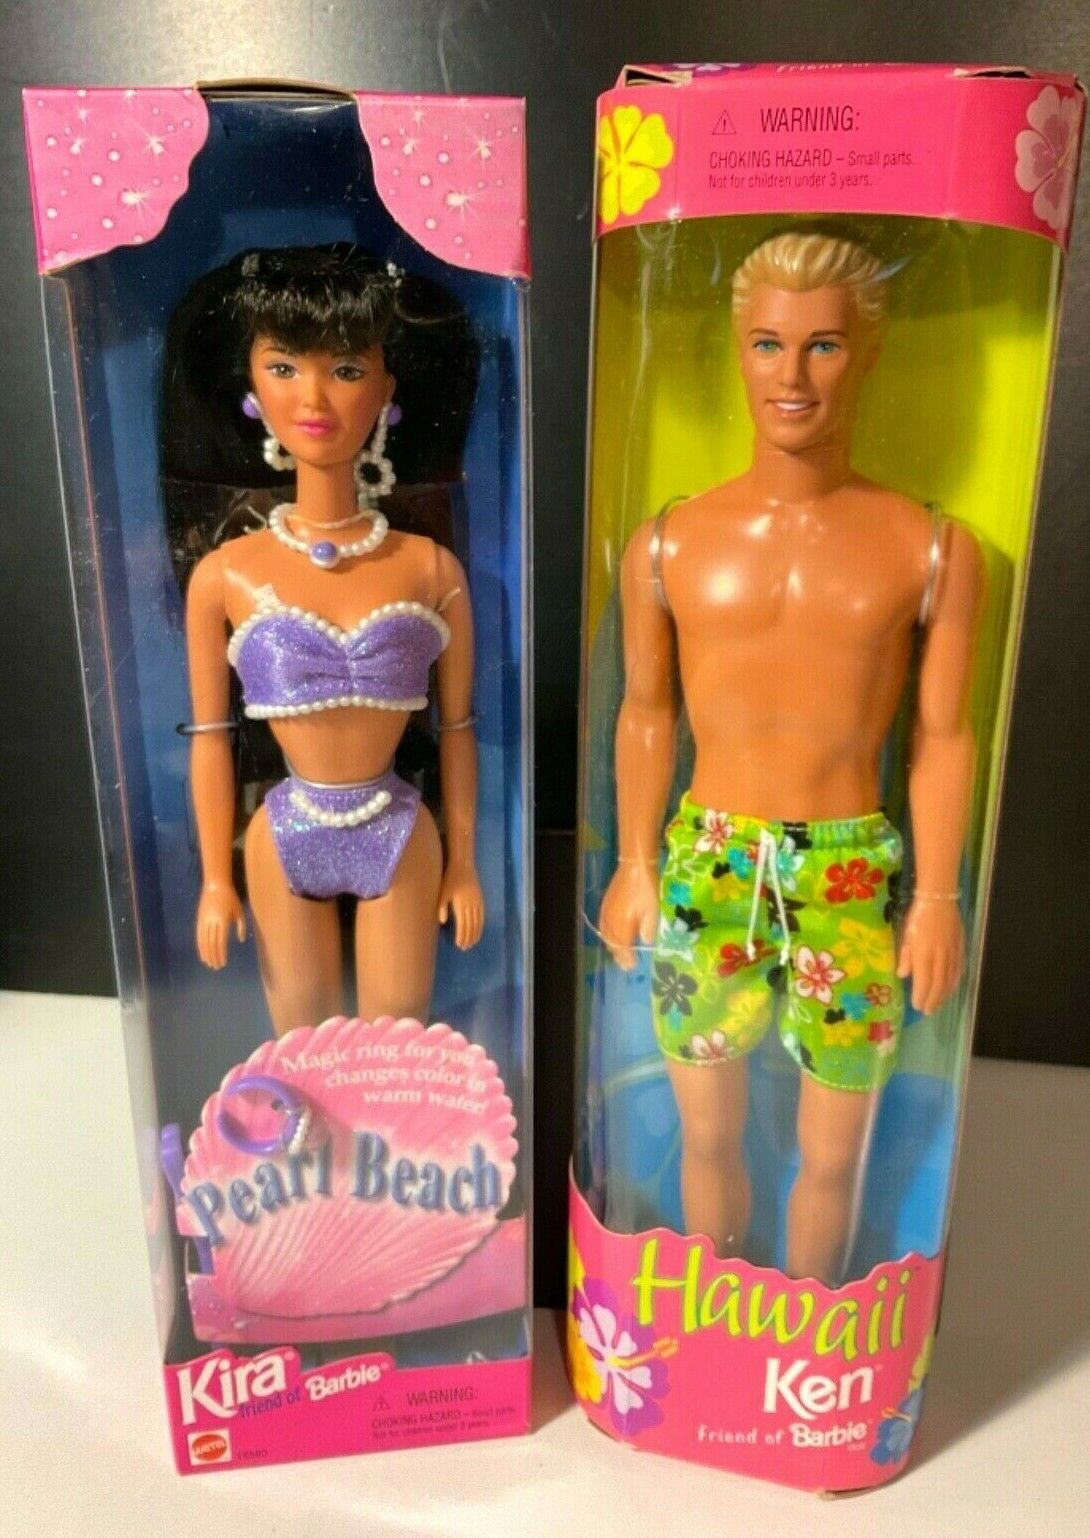 Vintage Lot of 2 Mattel Barbie 1997 Kira Pearl Beach & 1999 Hawaii Ken NIB Mattel 24616, 18580